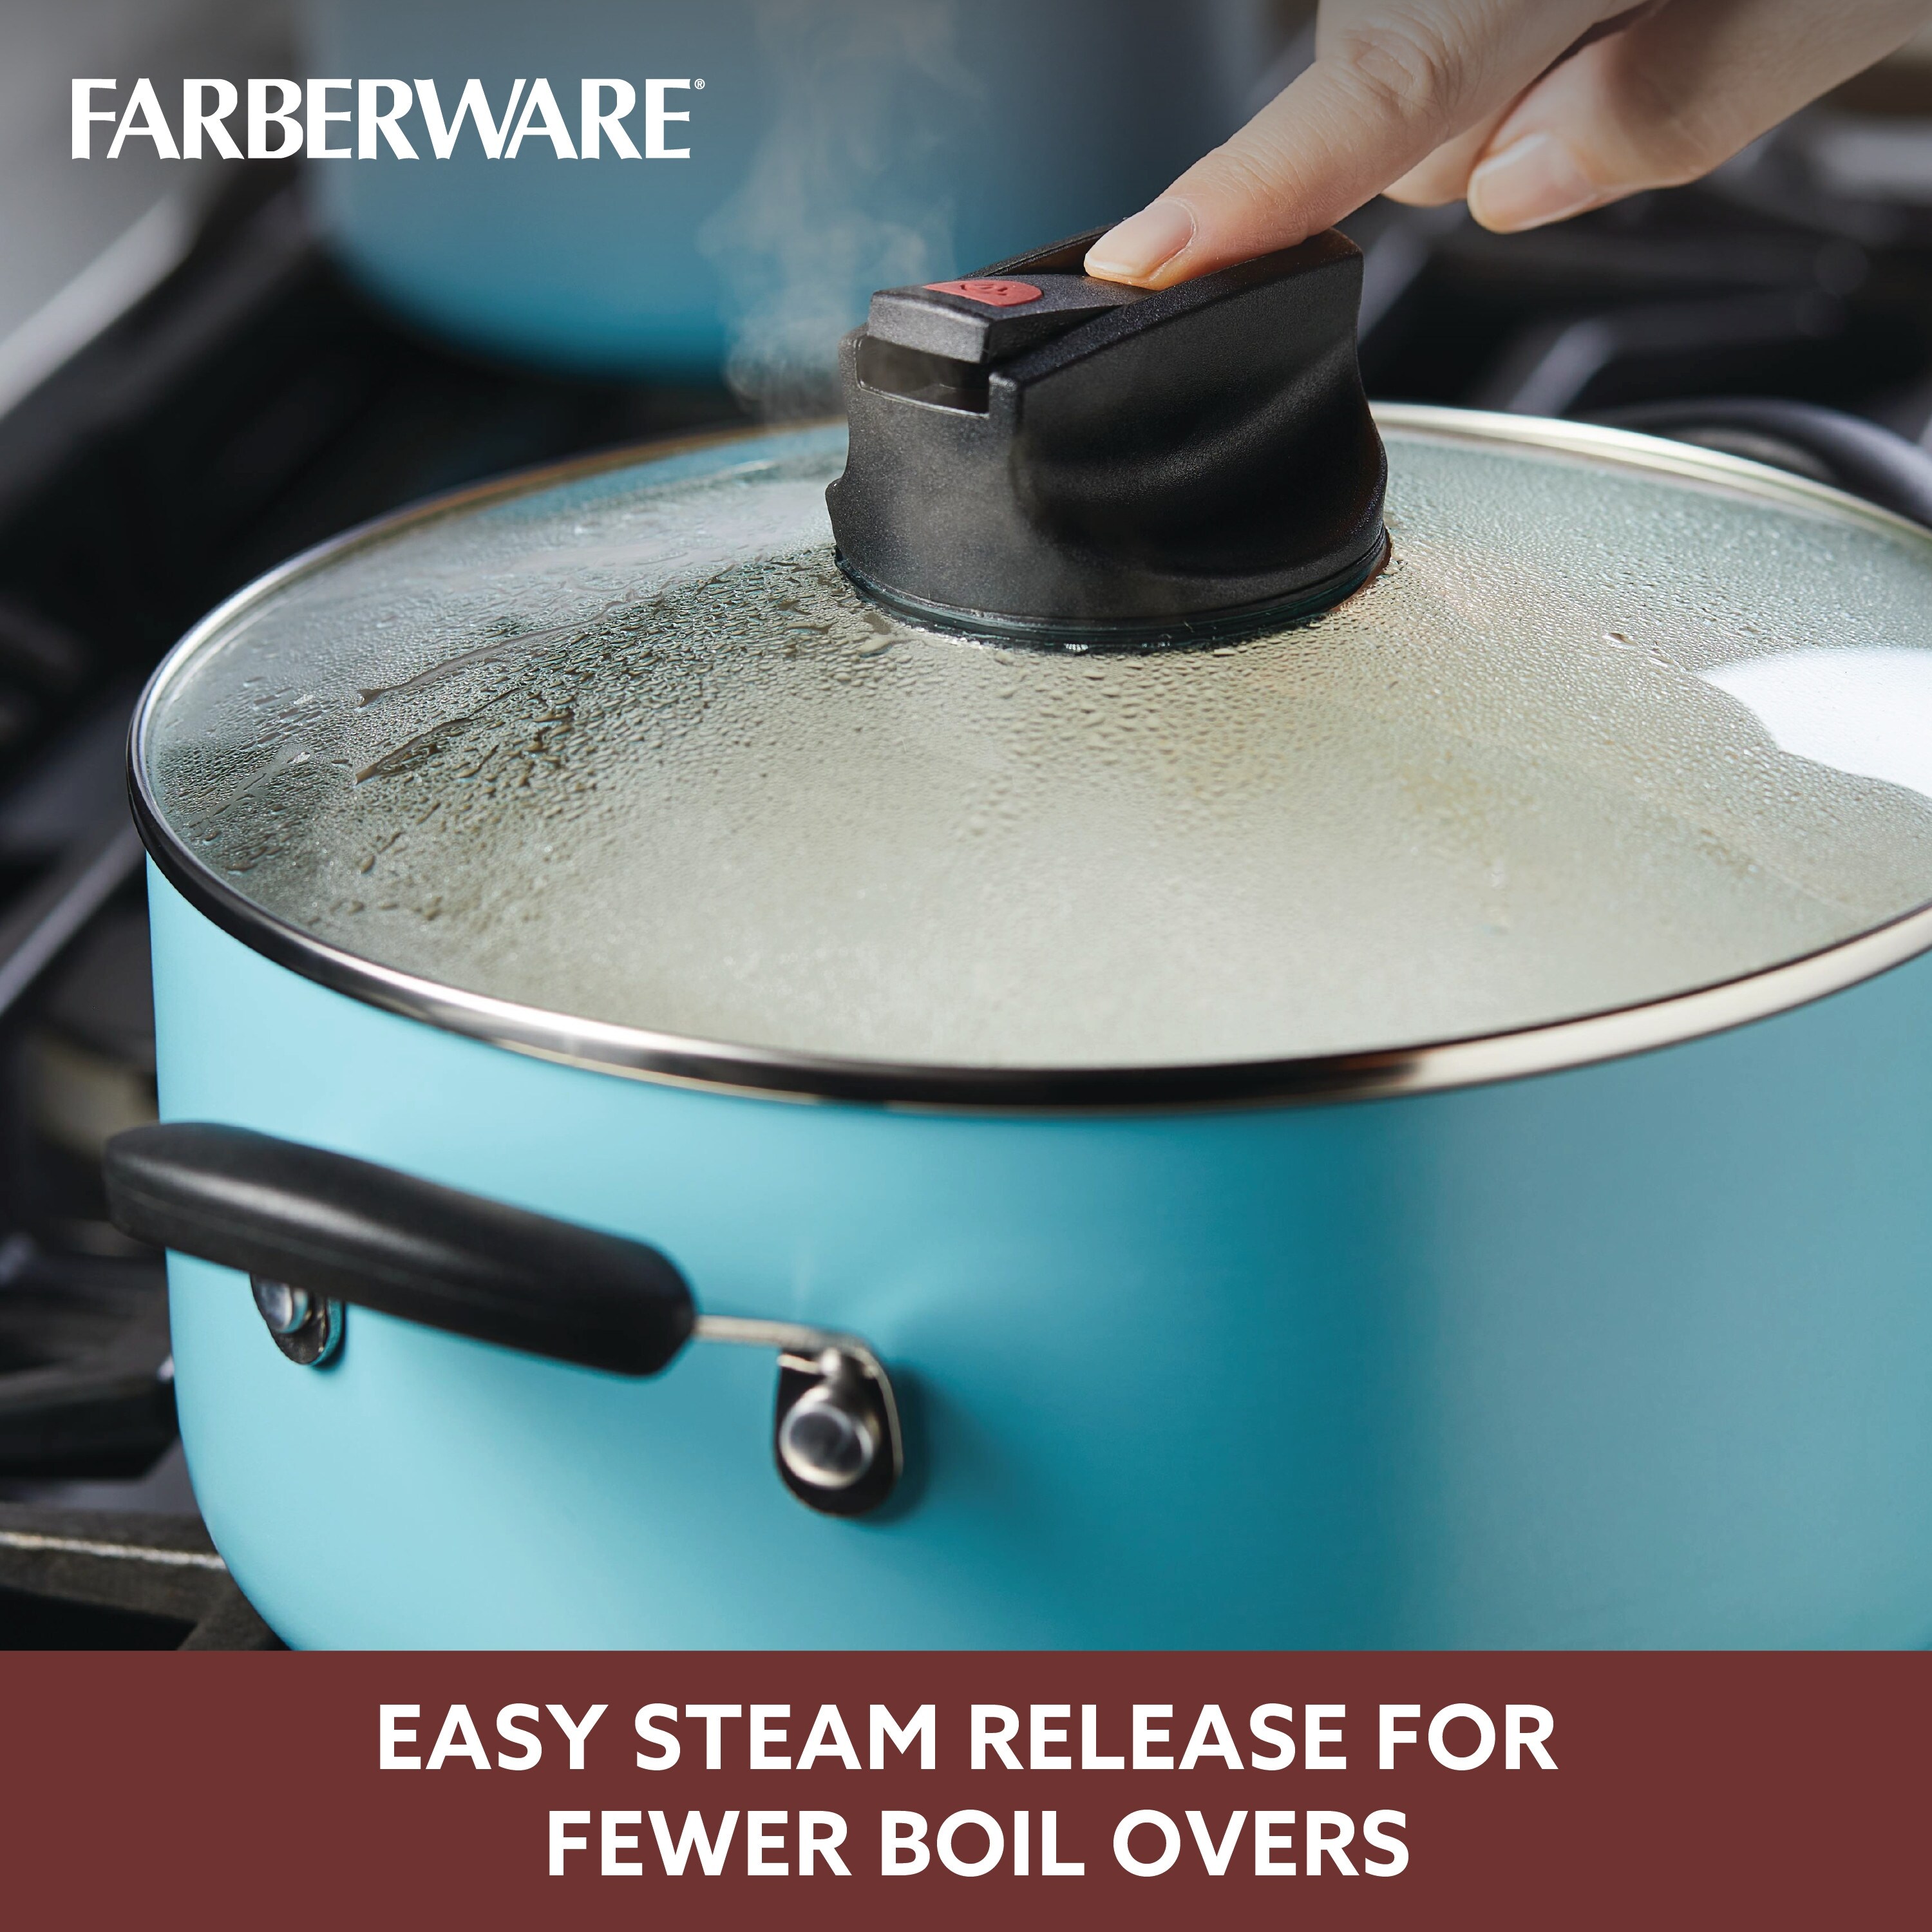 NEW Farberware Pots & Pans Set Smart Control Cookware Nonstick 14